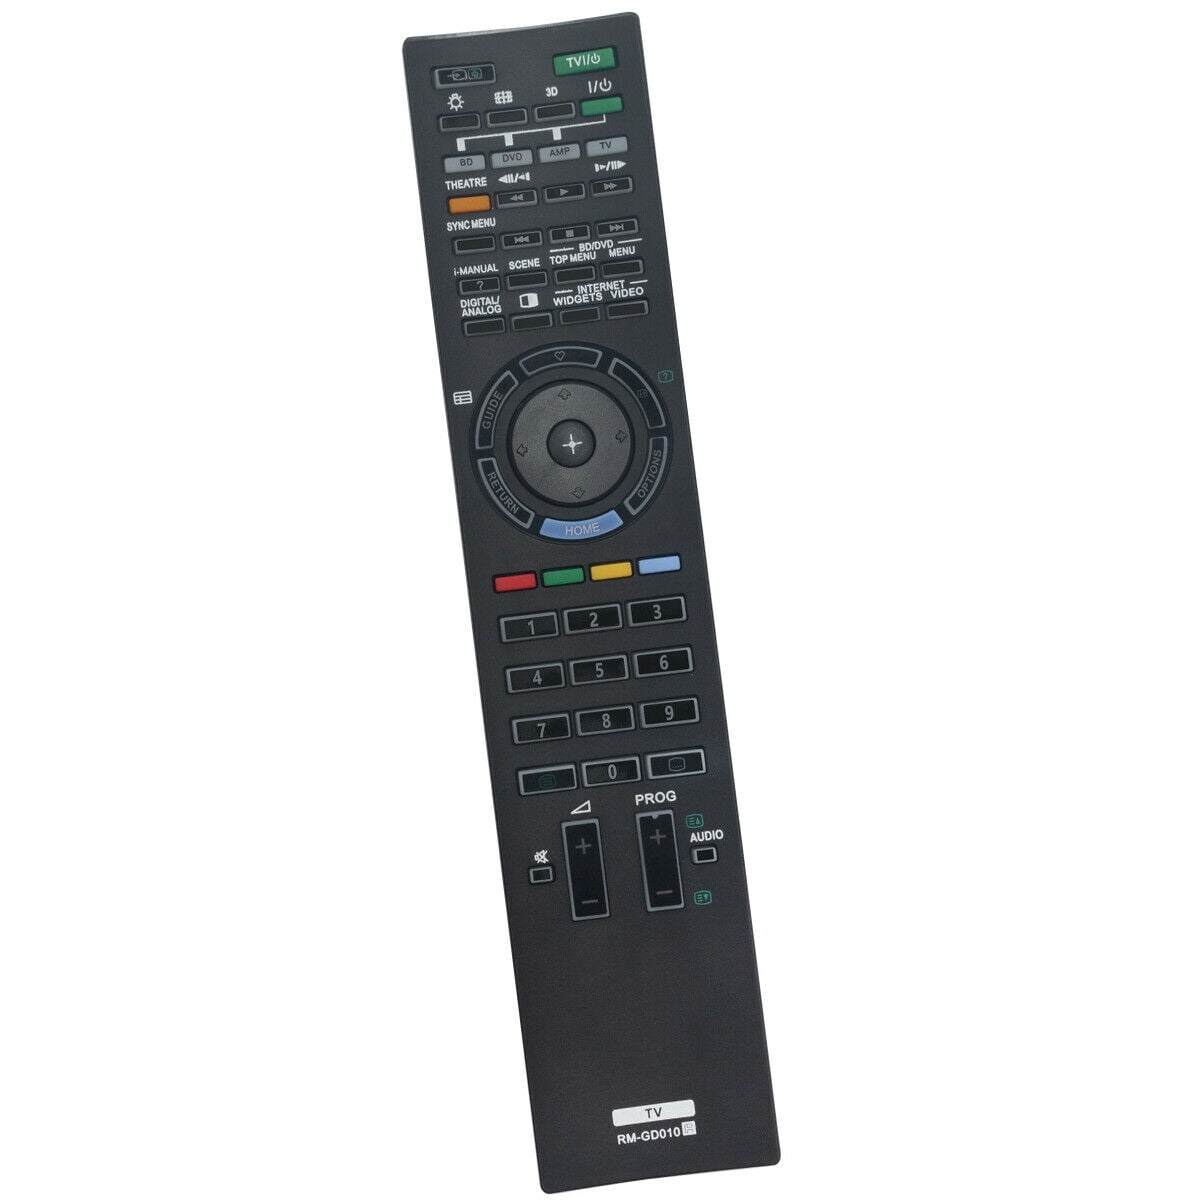 Remote Control for Sony TV KDL-55NX810 